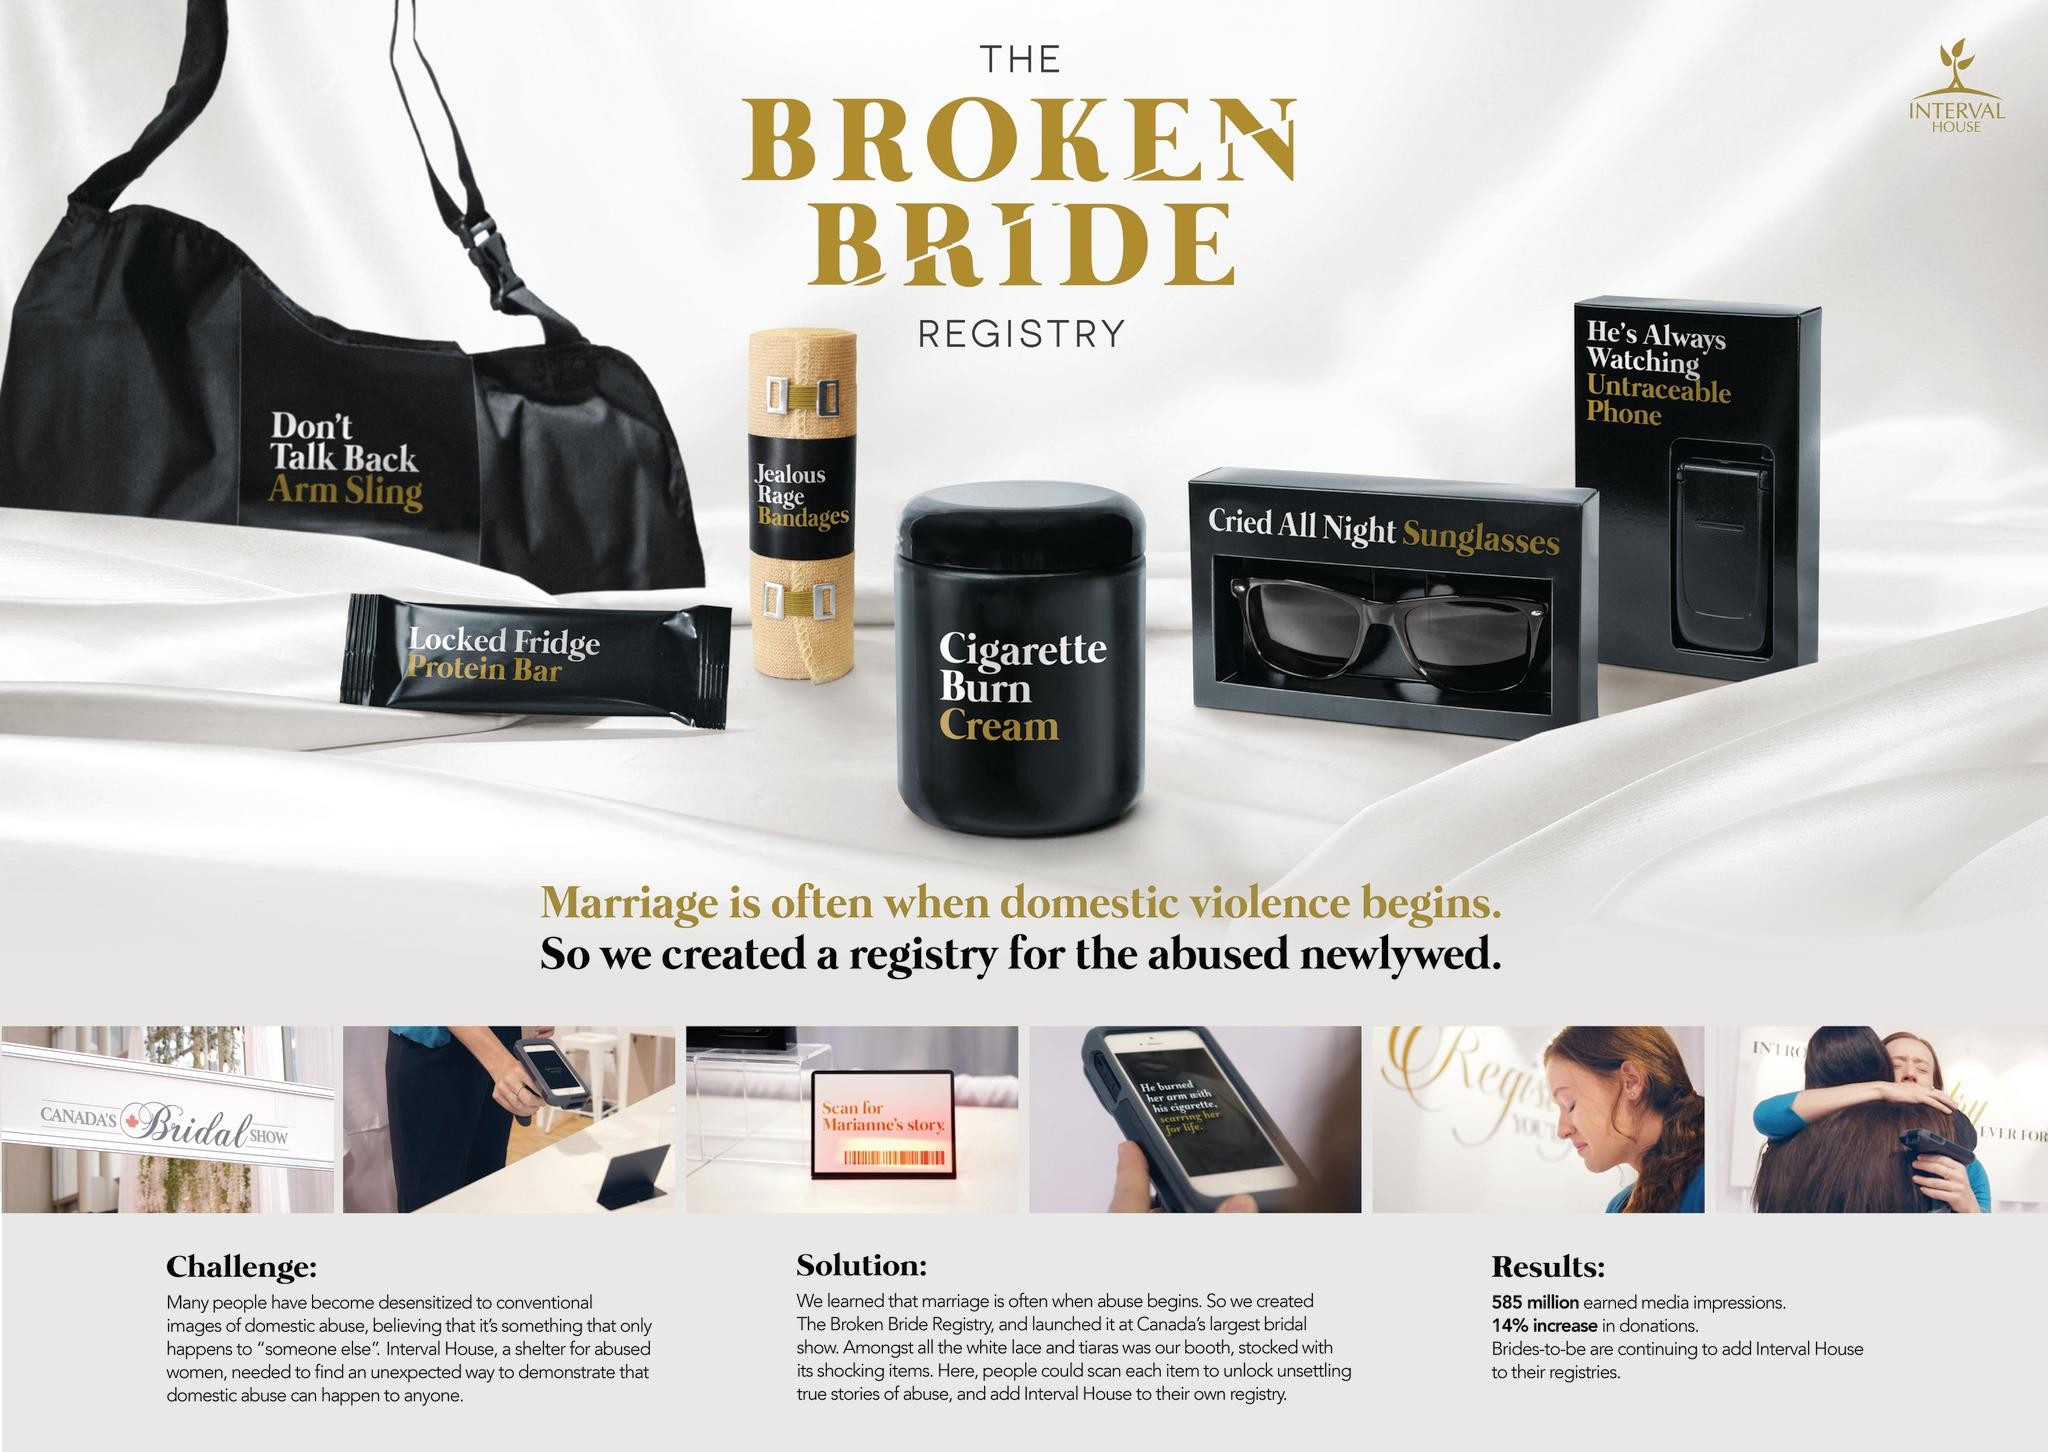 The Broken Bride Registry